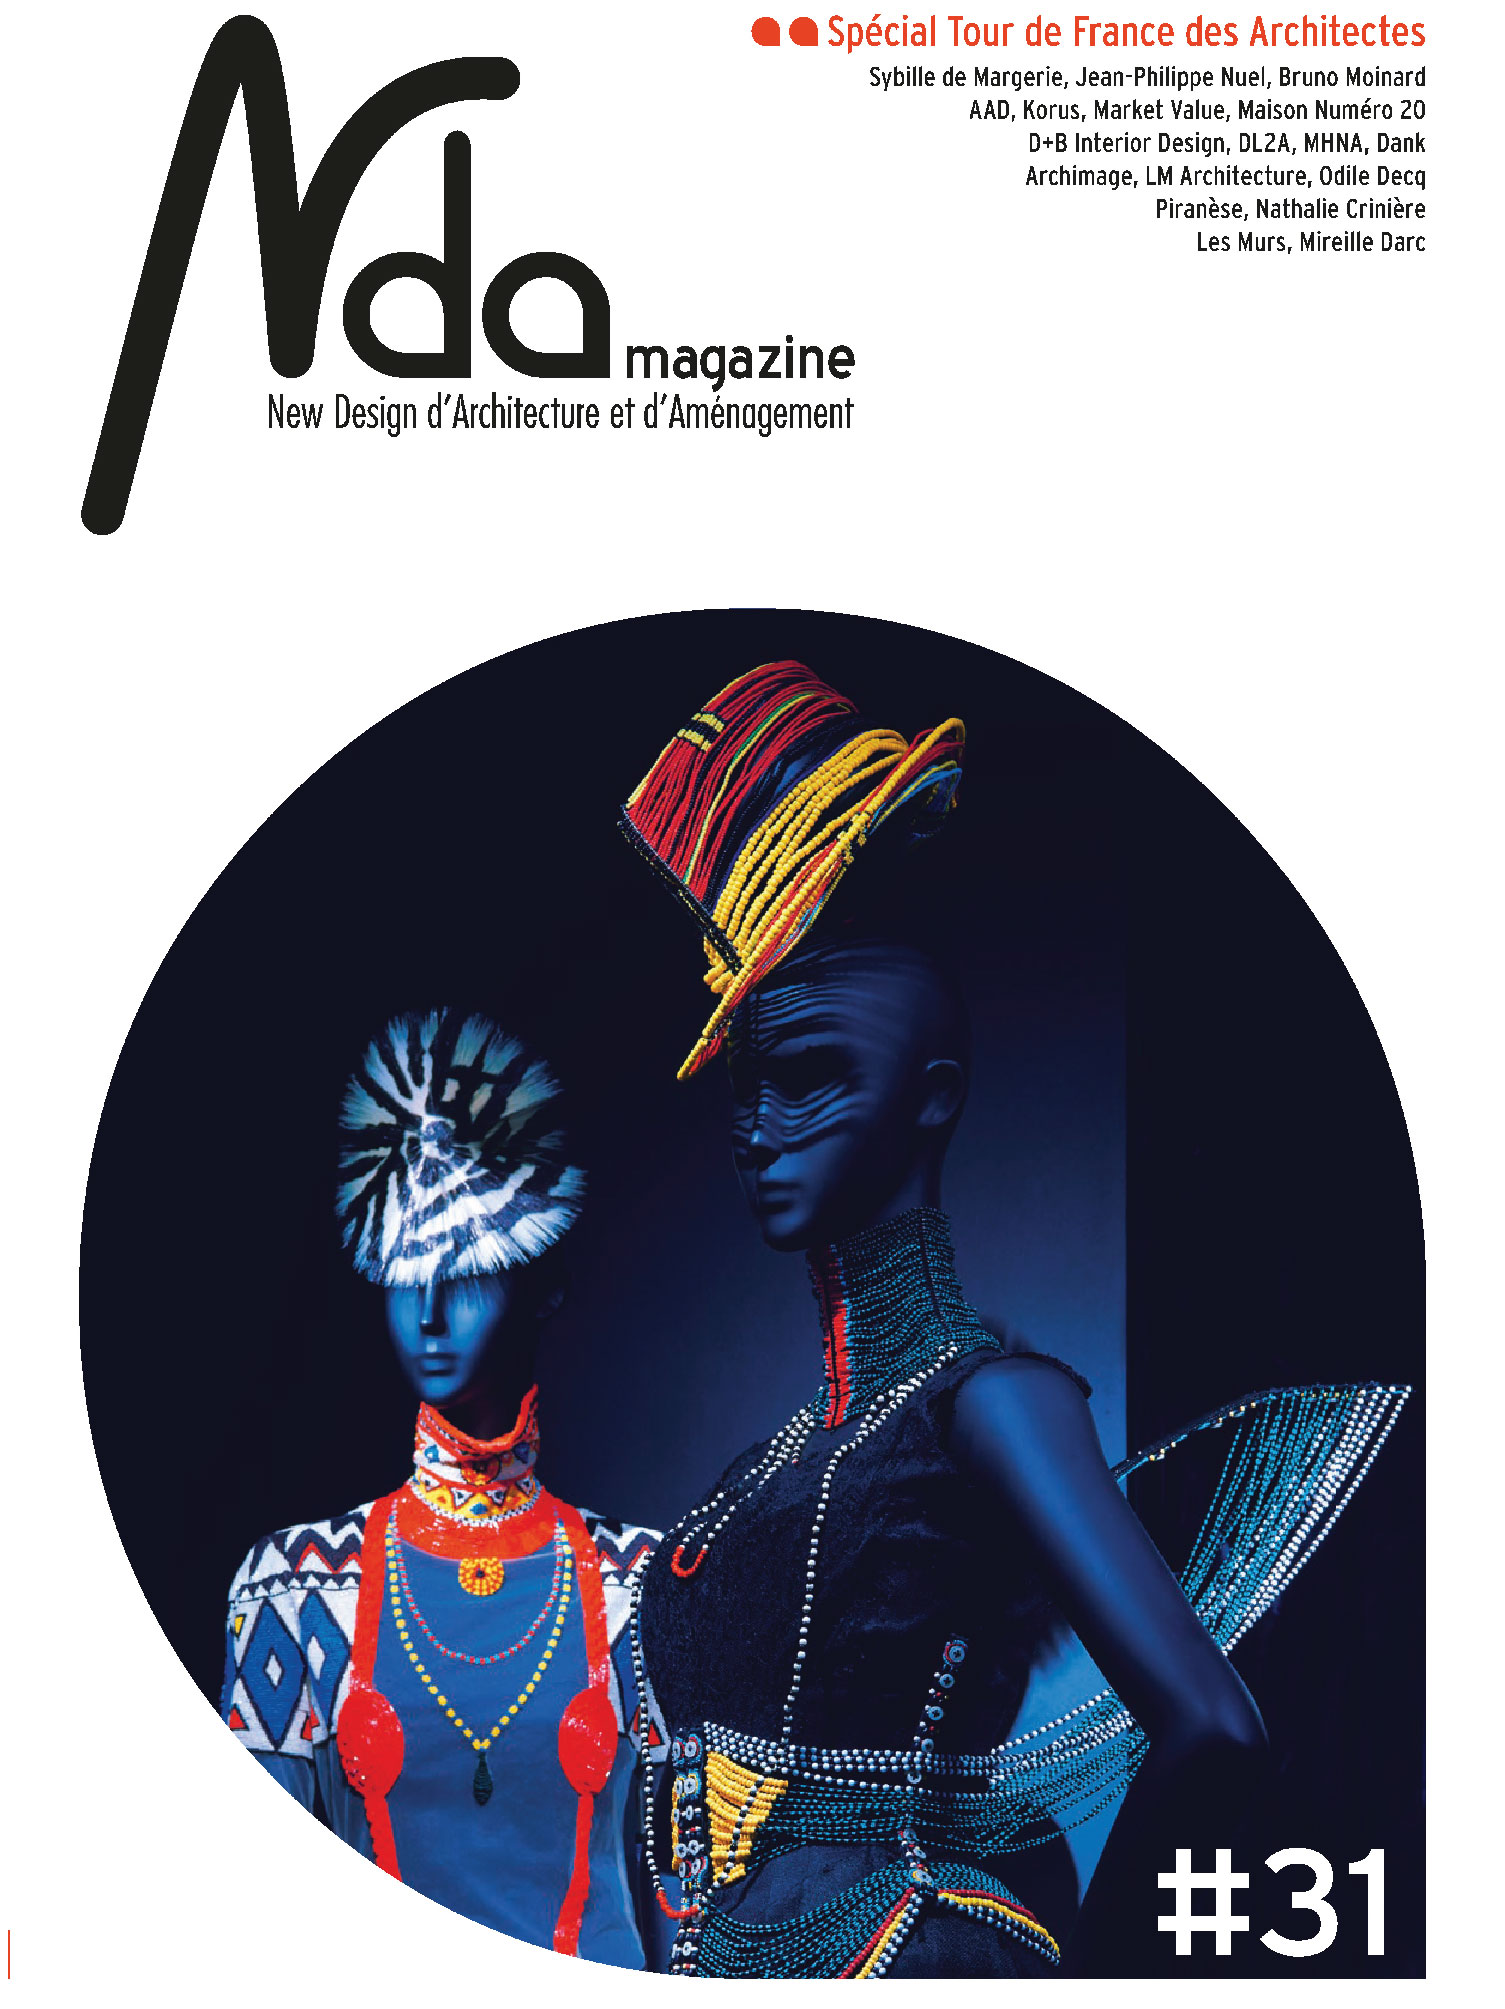 cover of the magazine nda november 2017